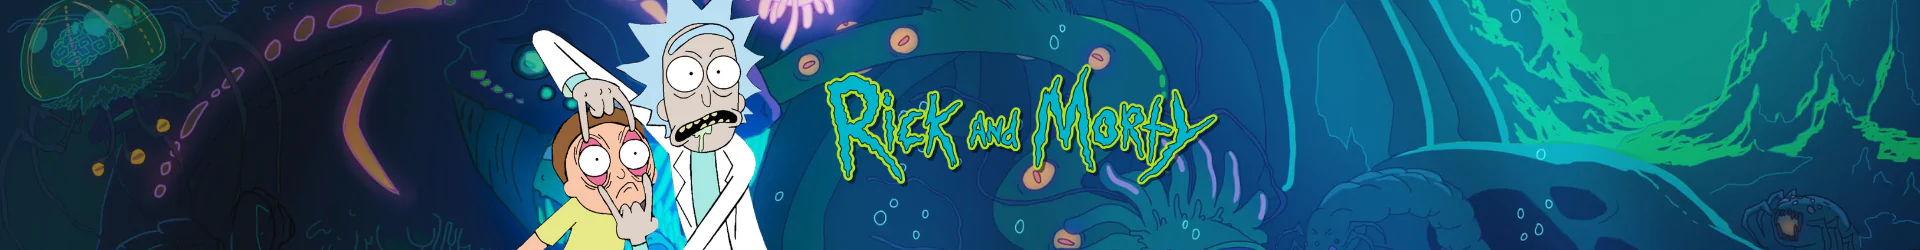 Rick and Morty bottles banner